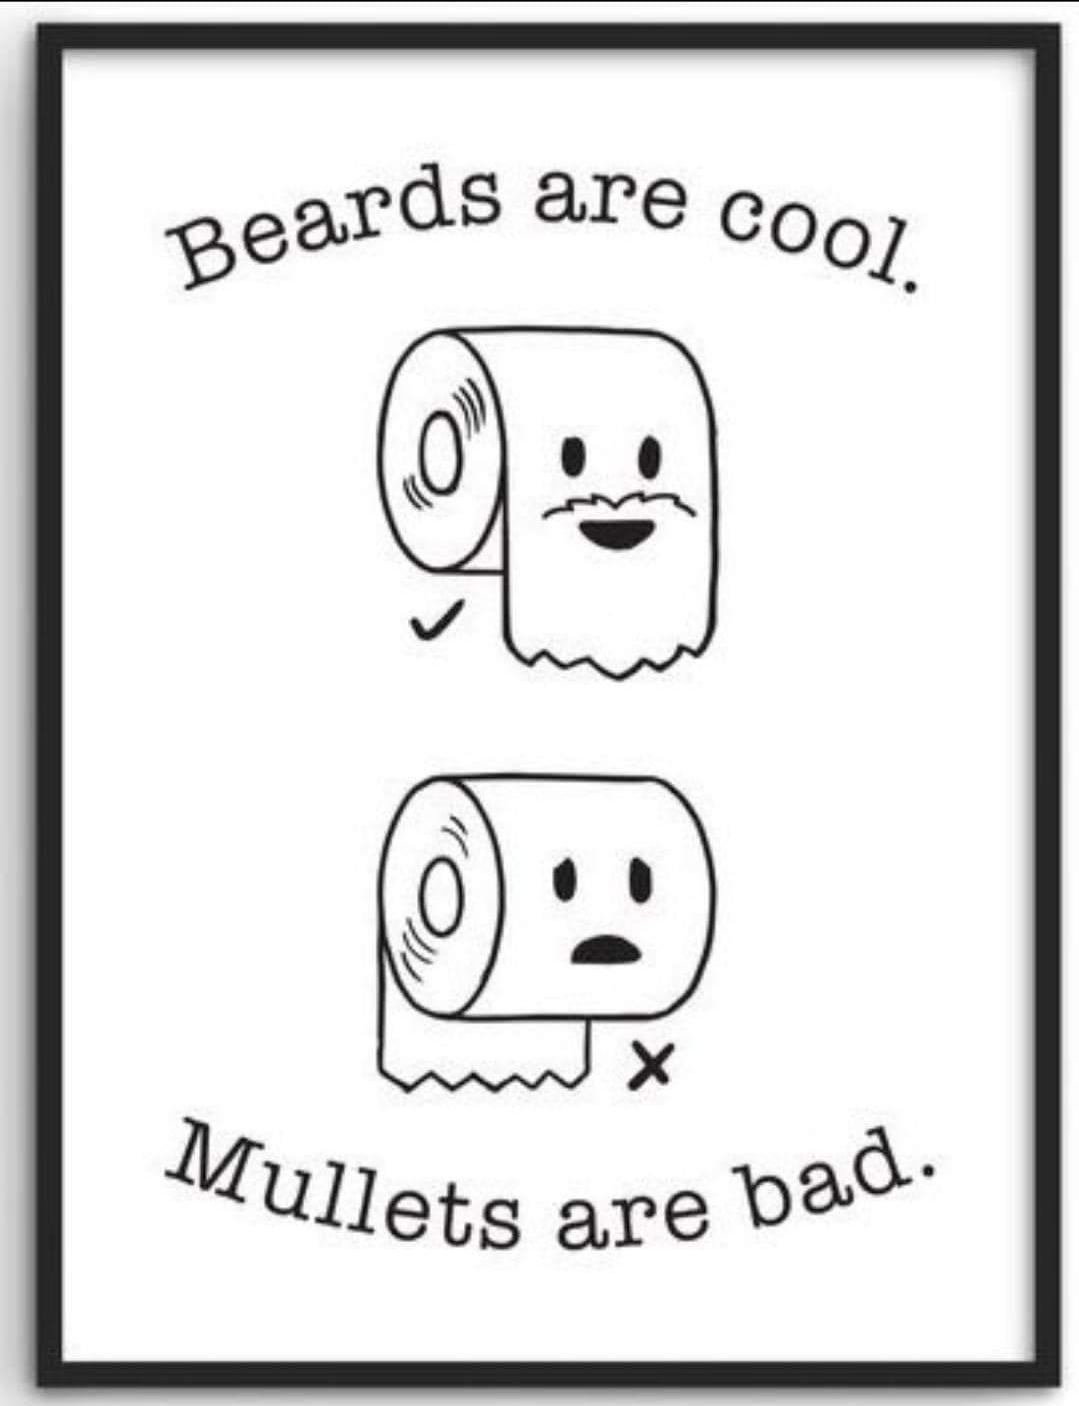 dank memes - bathroom humor art - Beards are cool. X Mullets are bad.